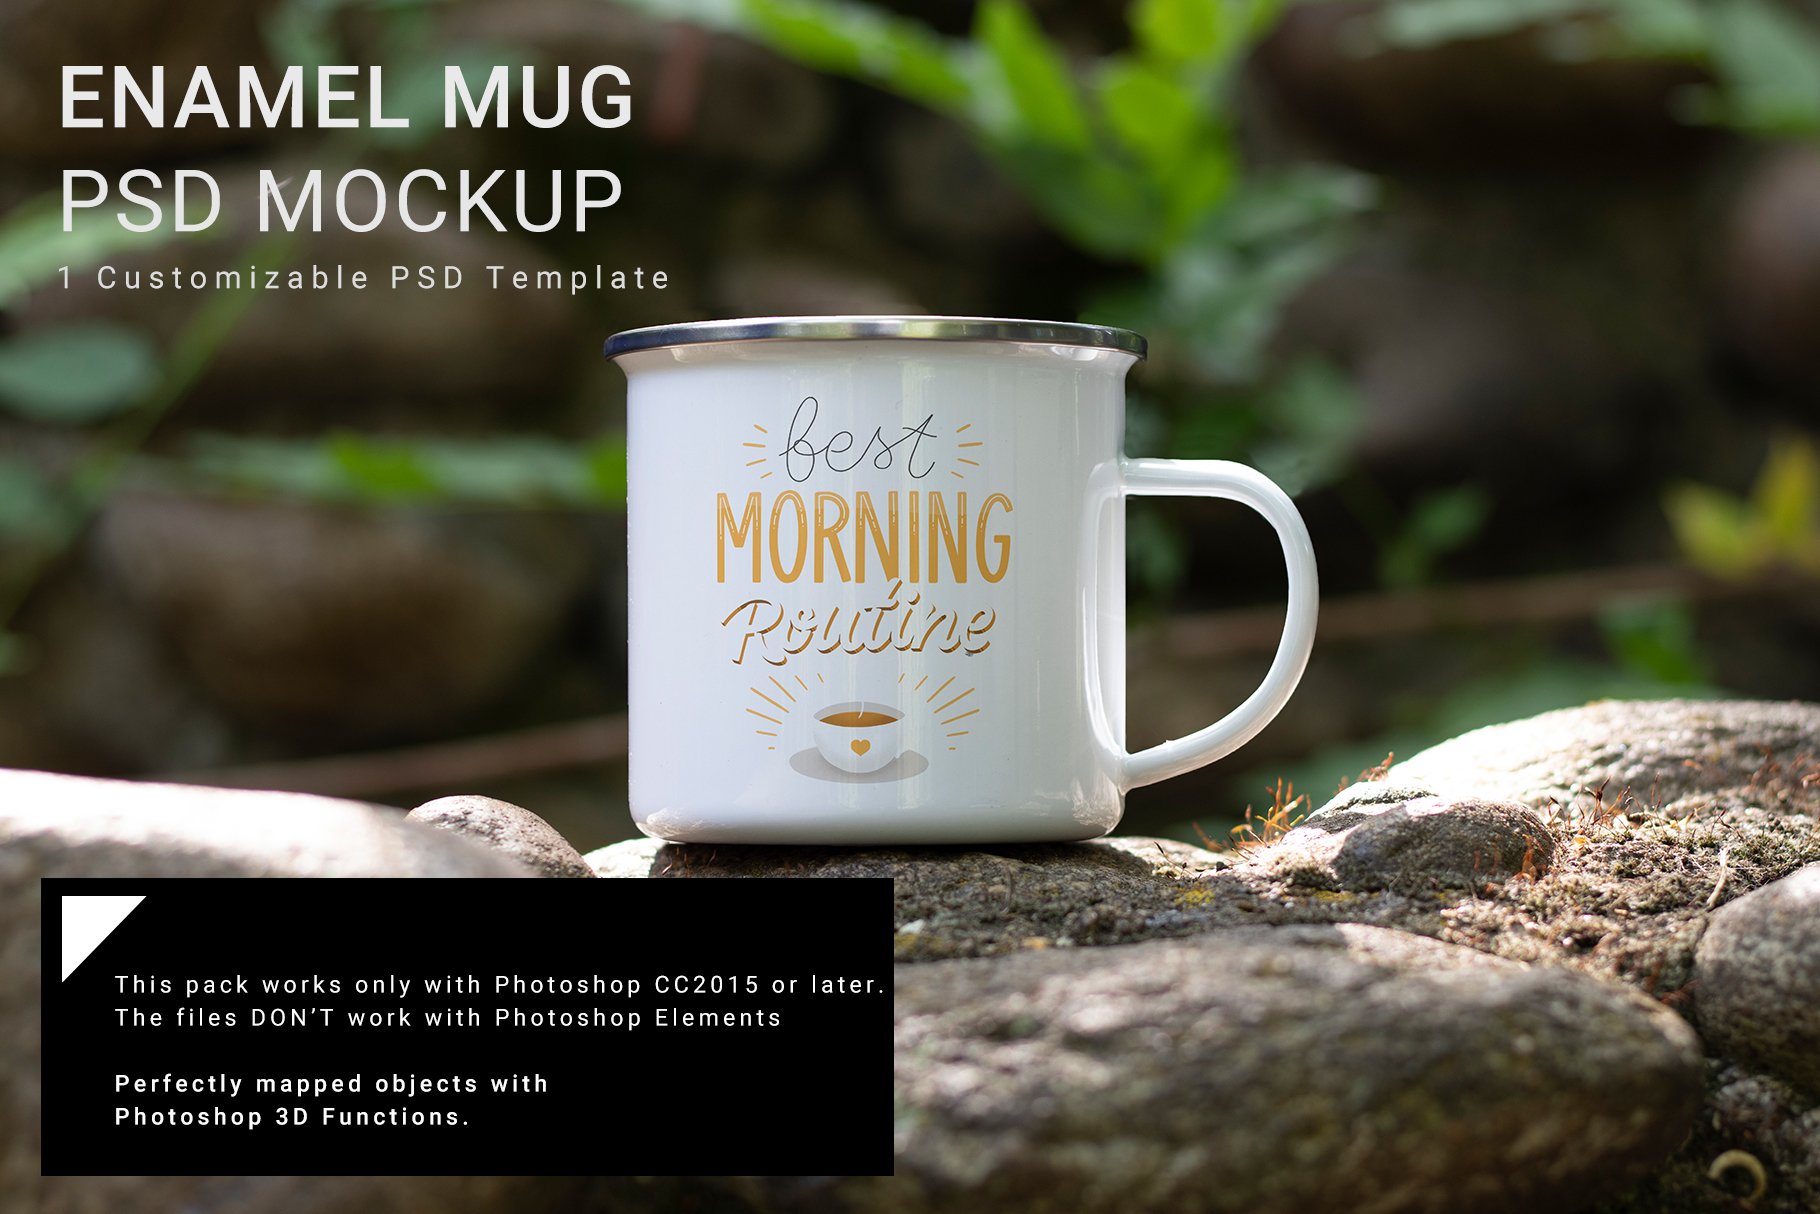 Enamel Mug 3D Mockup cover image.